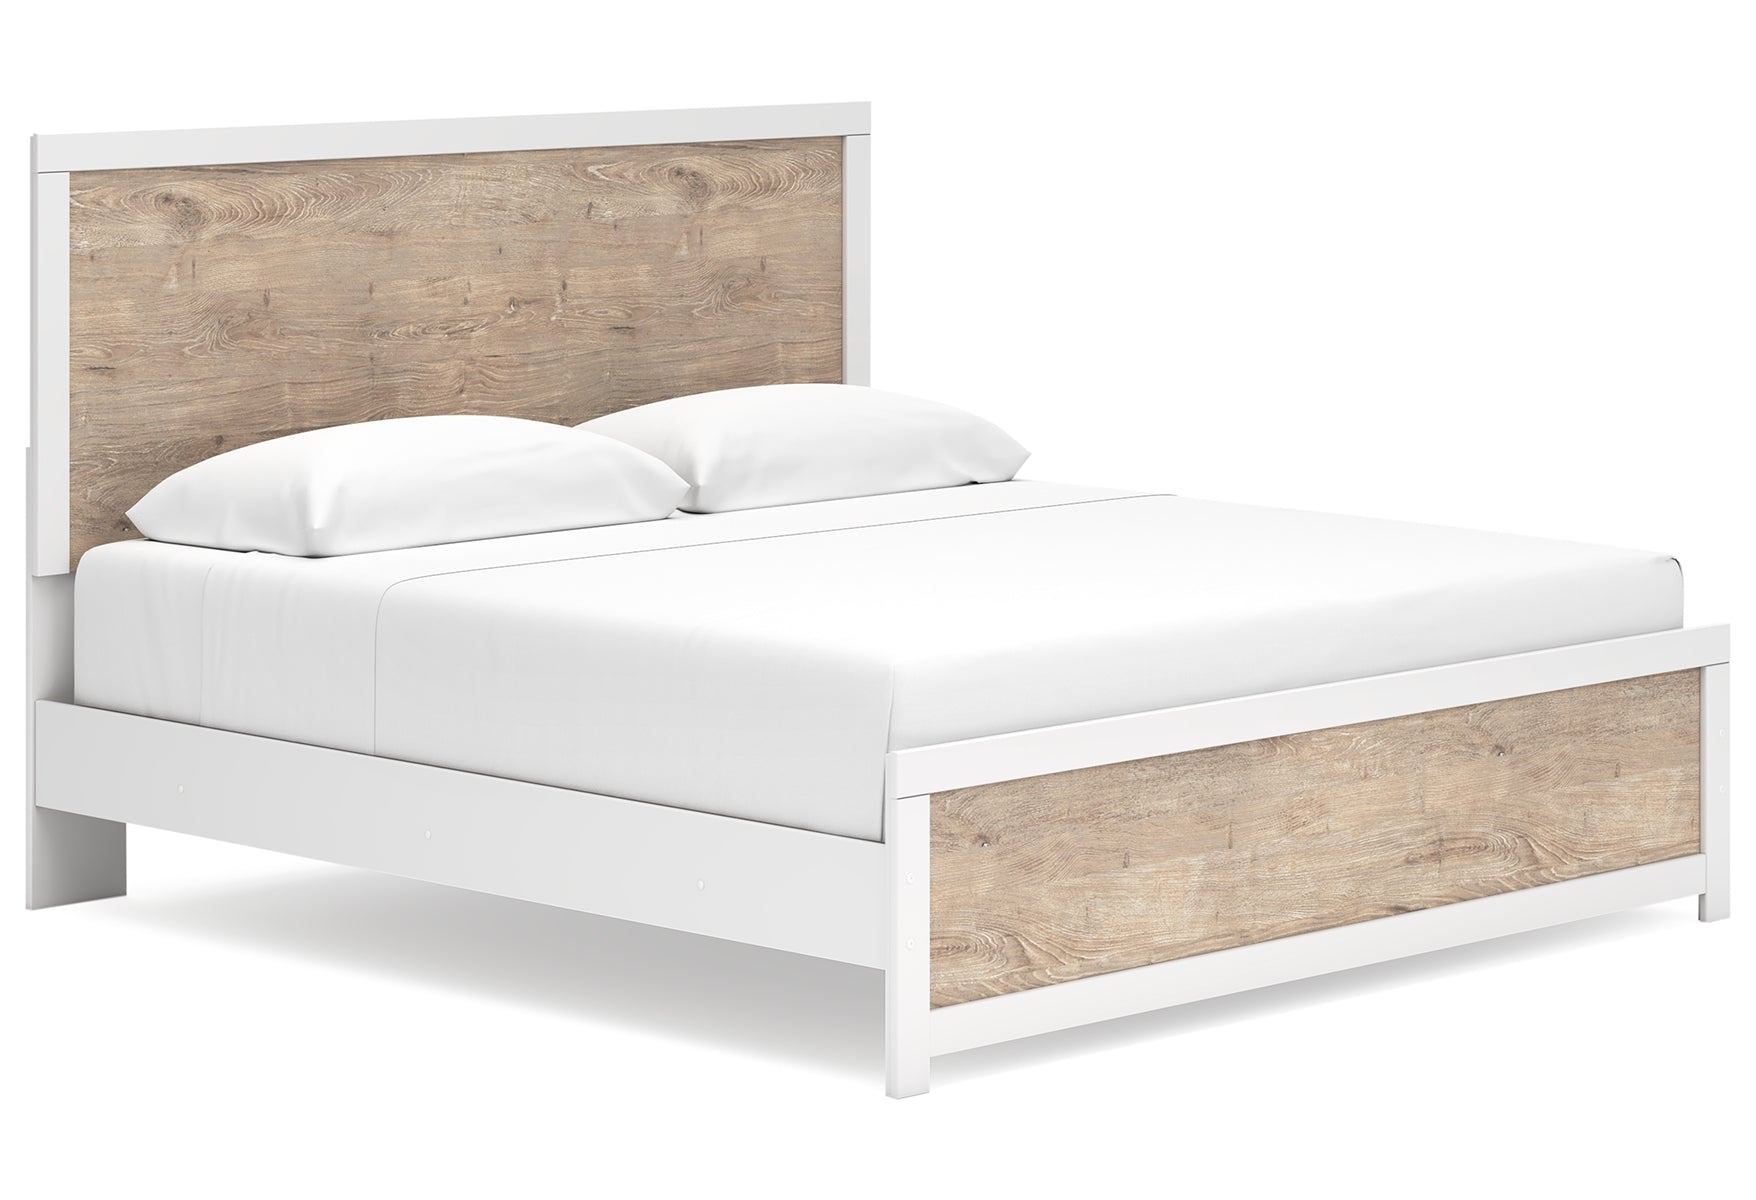 Charbitt King Panel Bed with Dresser